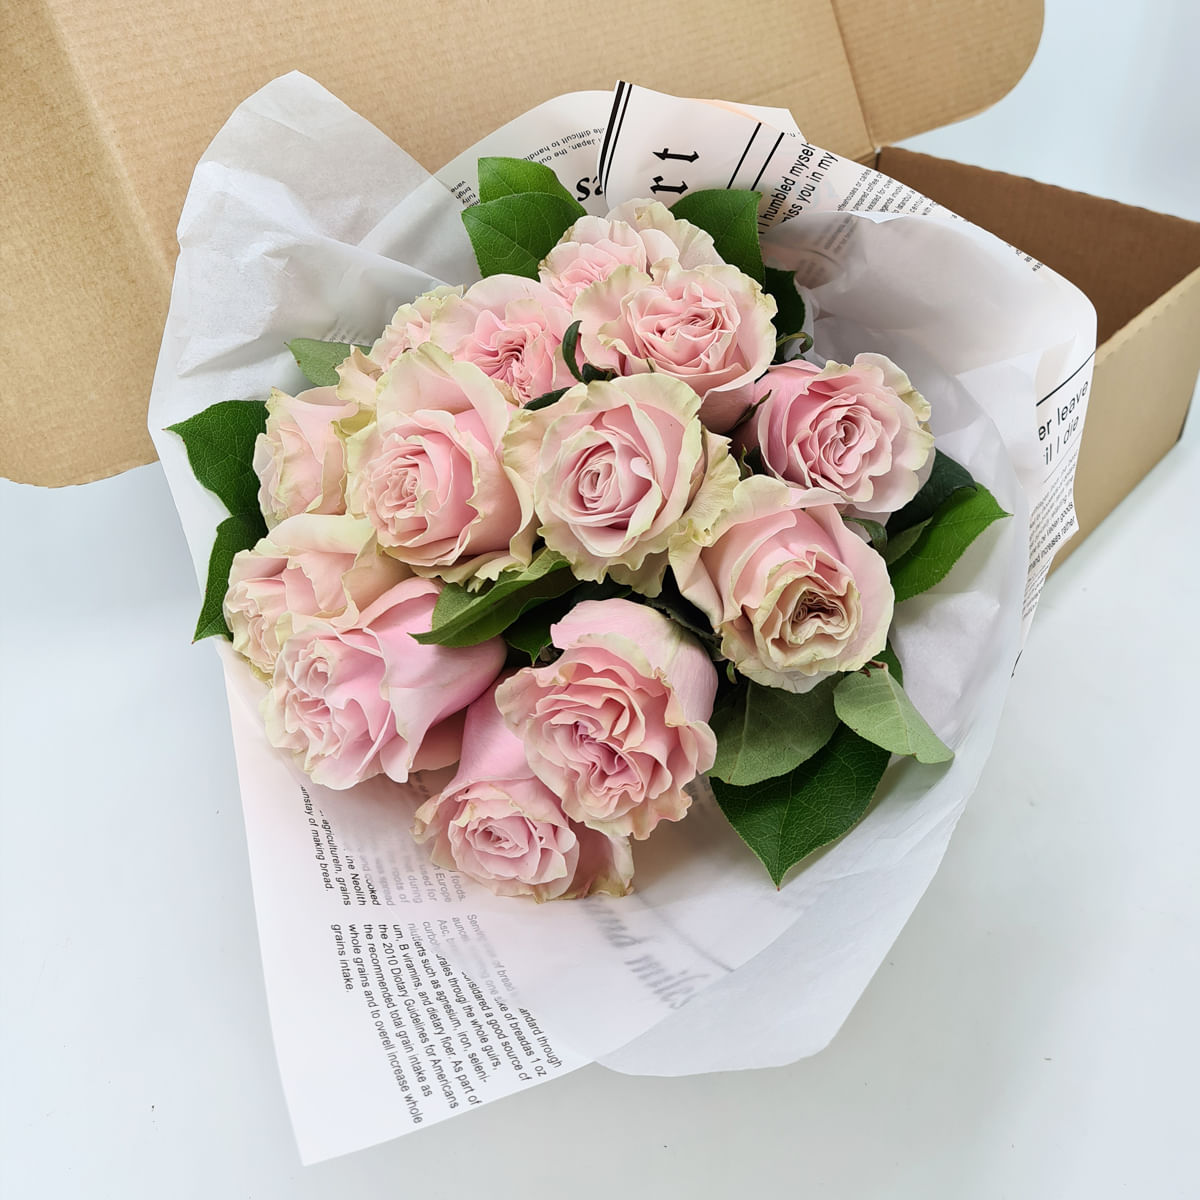 Buchet de 13 trandafiri roz in cutie Buchet